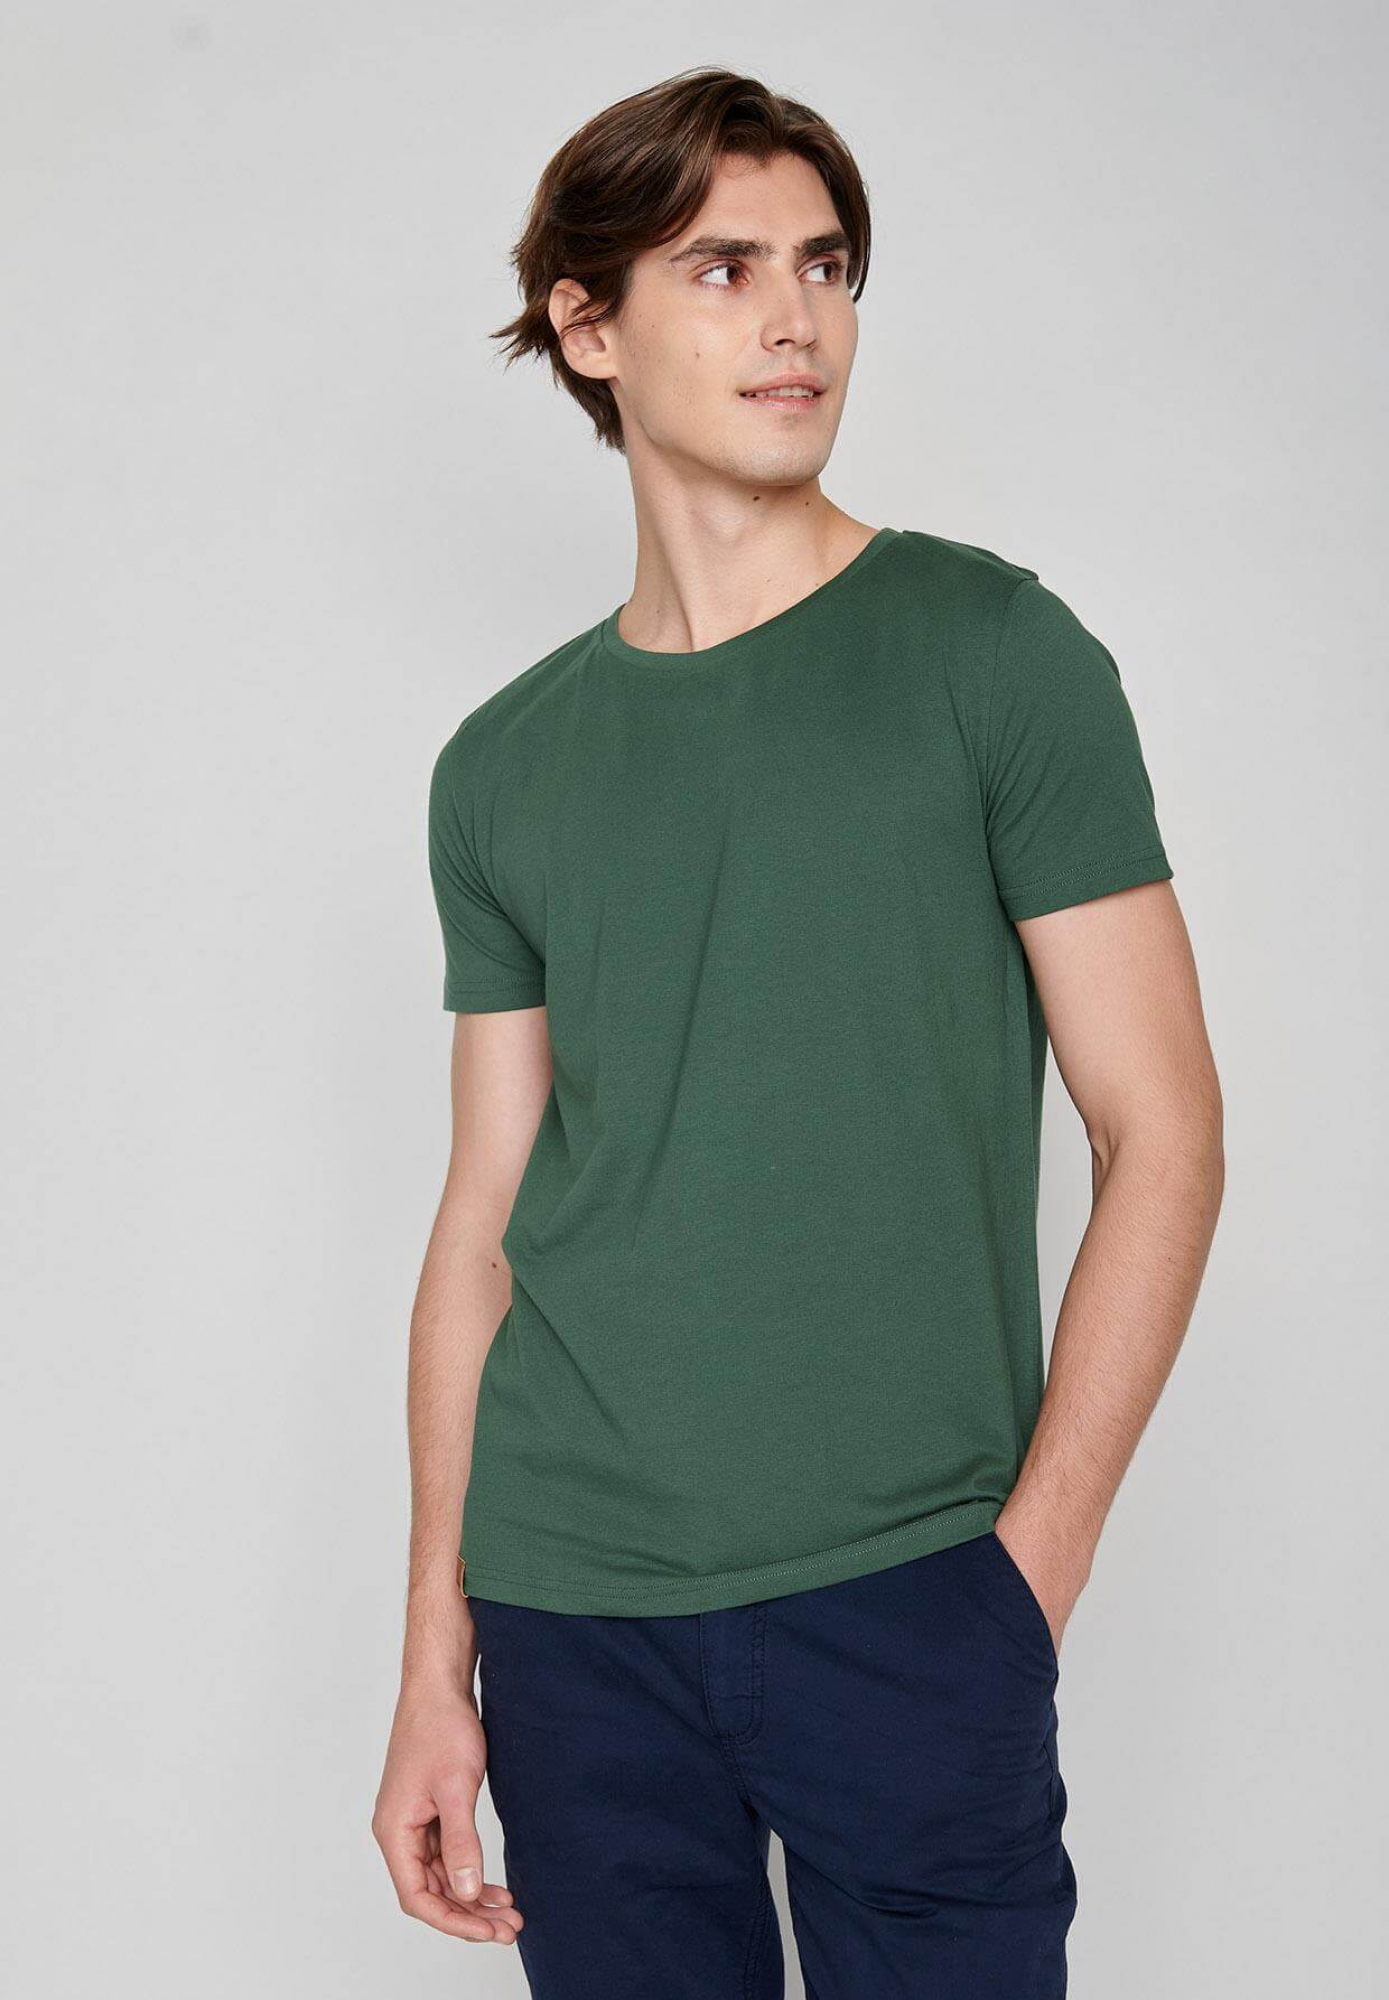 Greenbomb Herren Basic T-Shirt Guide